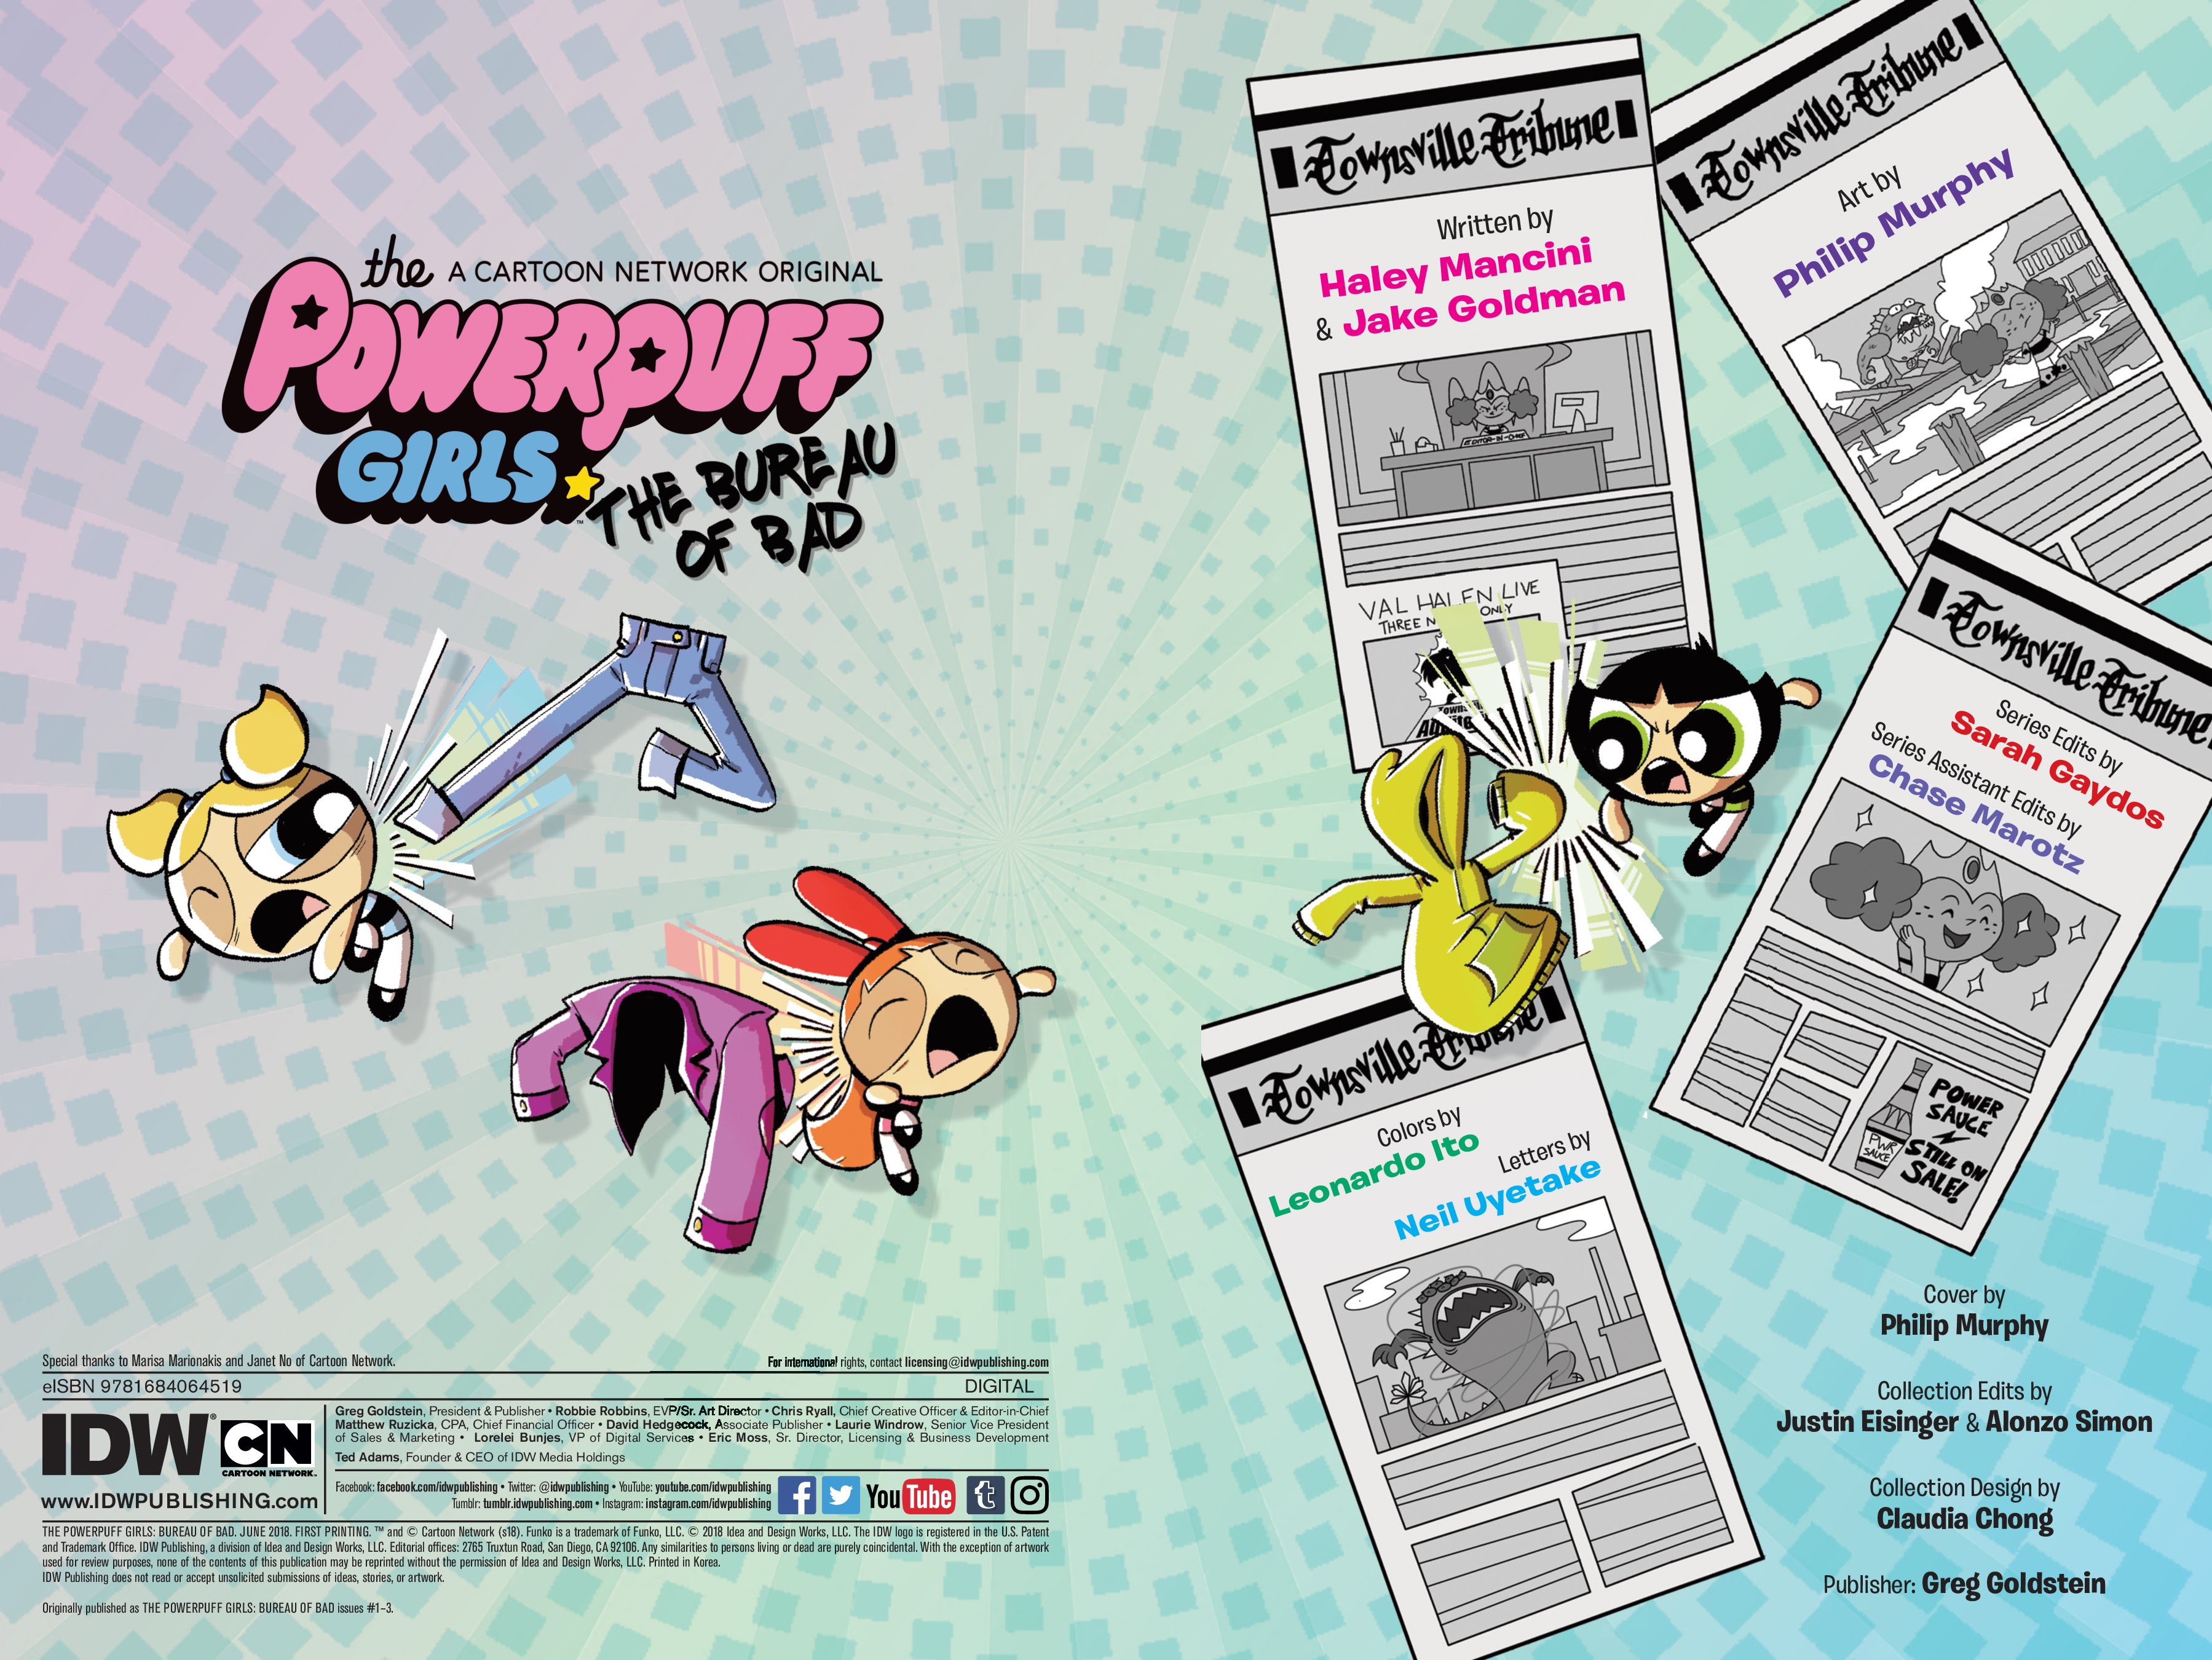 Read online The Powerpuff Girls: Bureau of Bad comic -  Issue # _TPB - 4